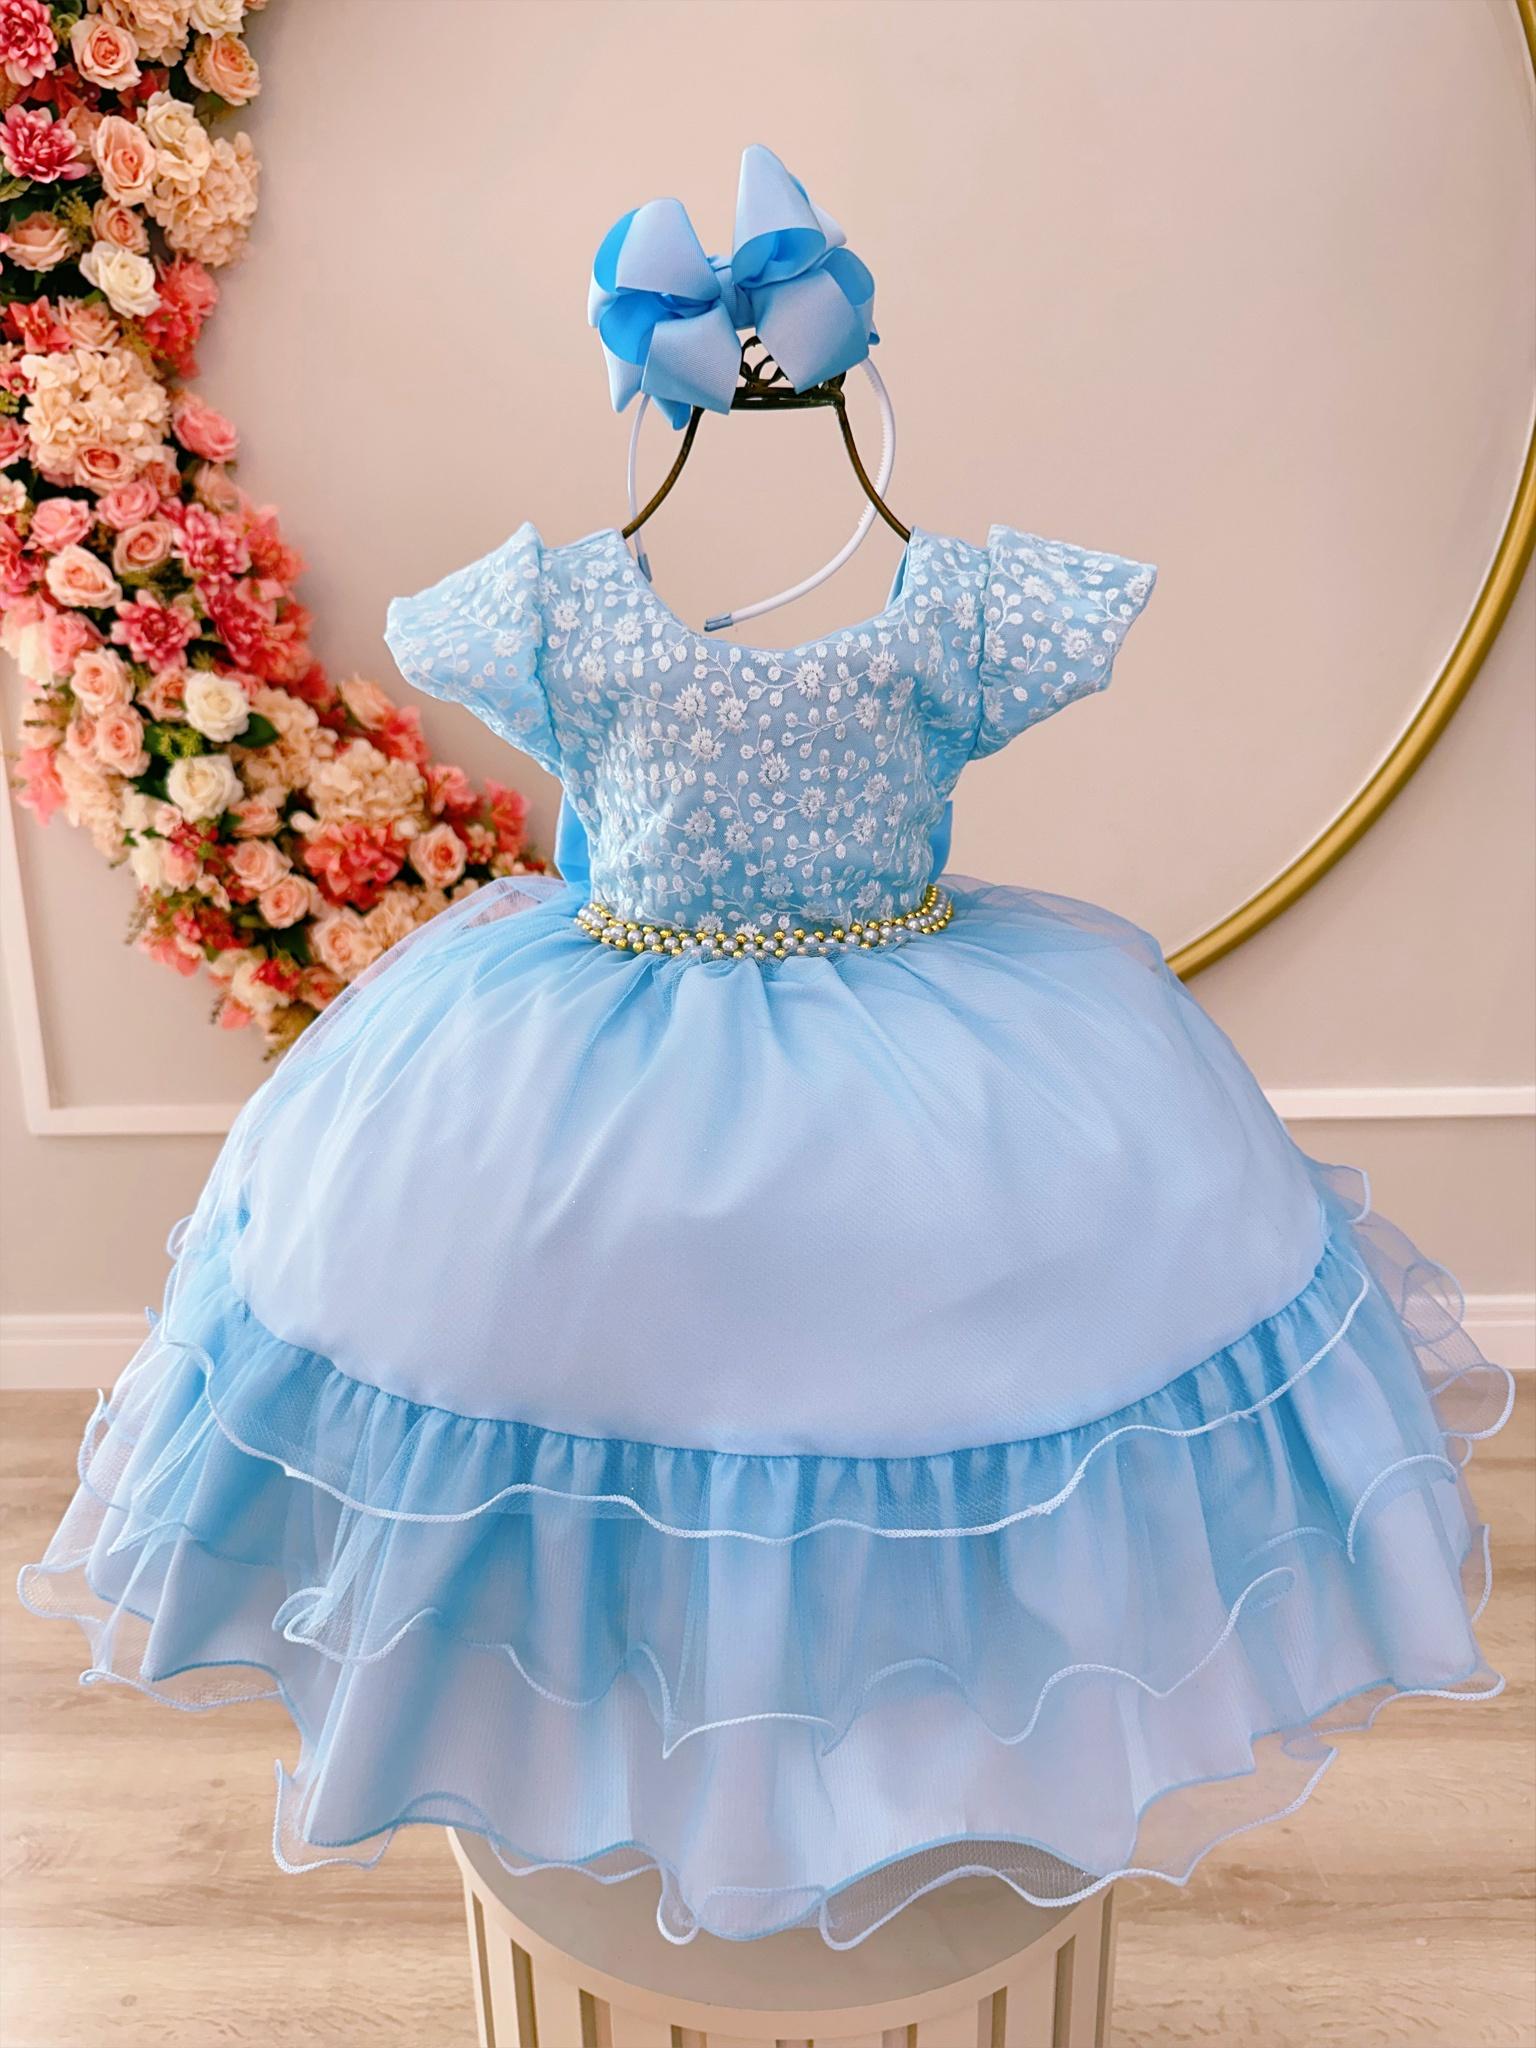 Vestido Infantil Azul Claro C/ Renda Cinto de Pérolas Festas